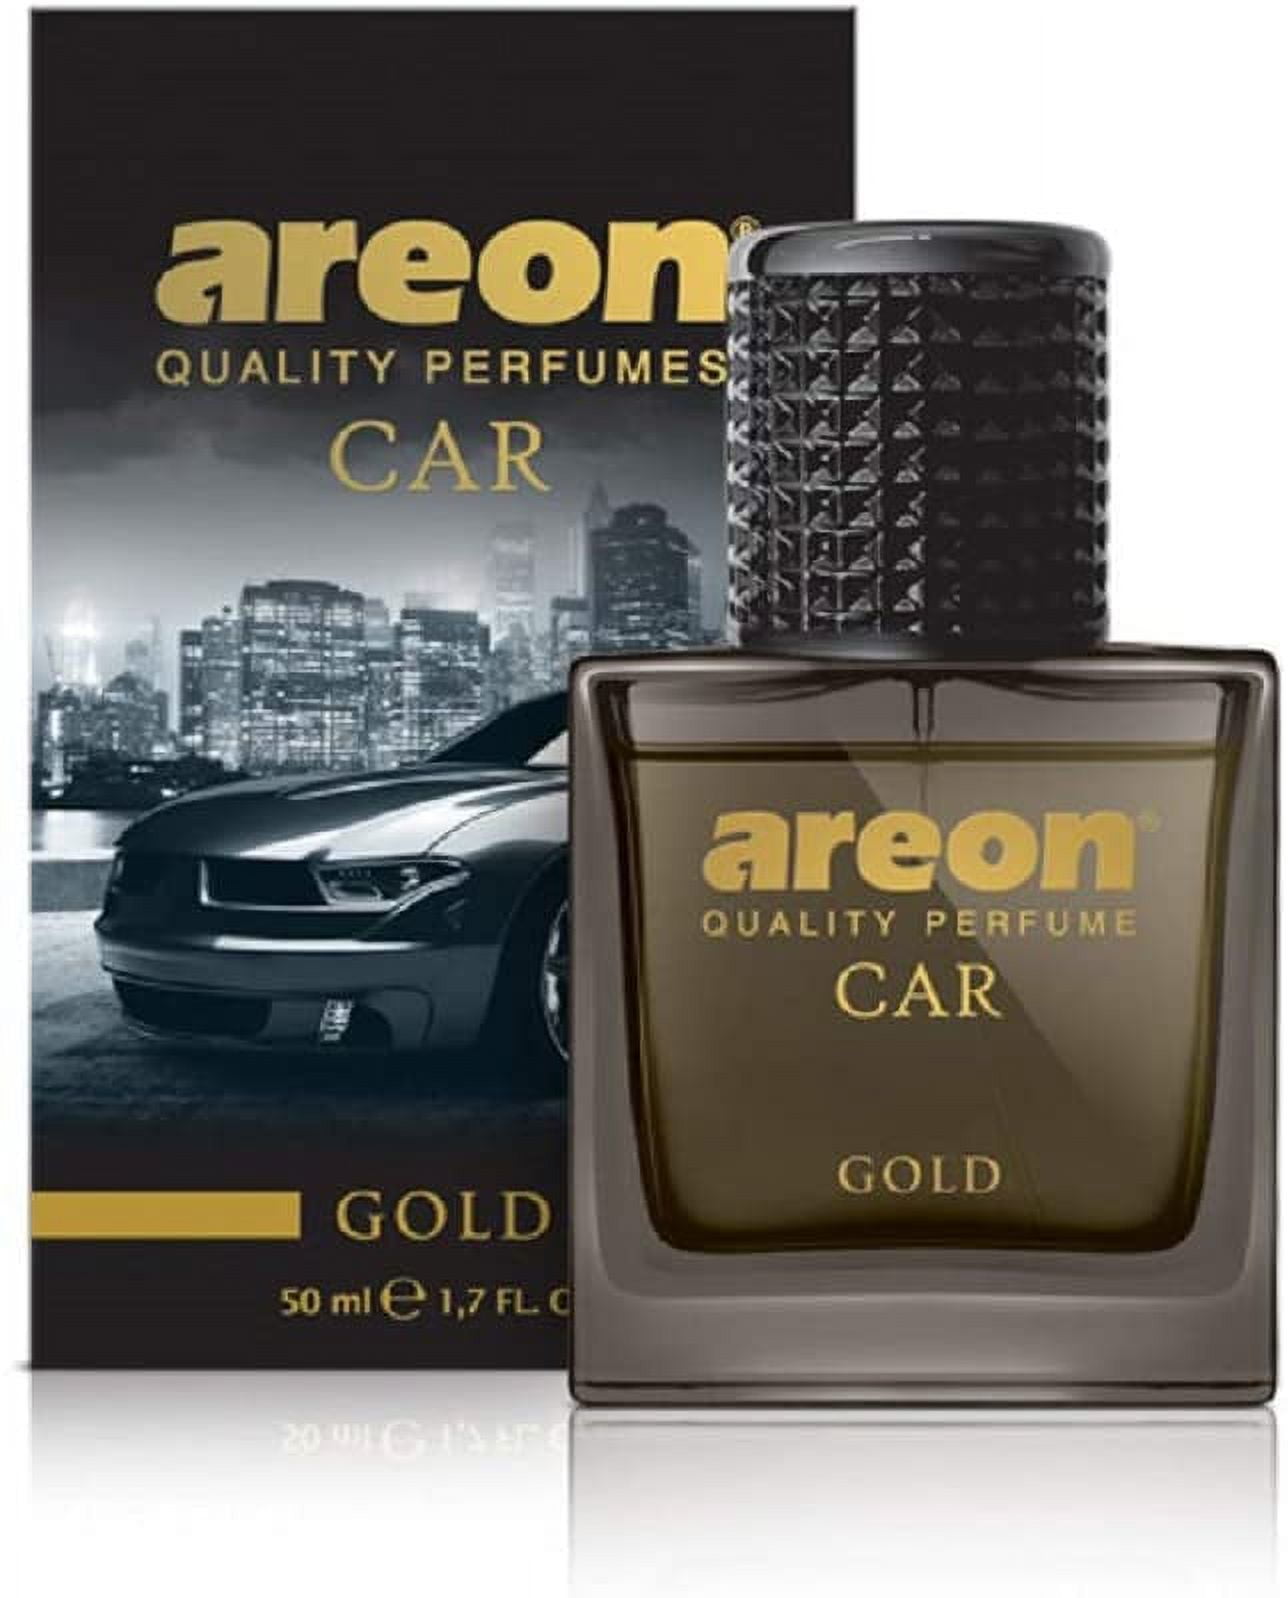 Areon Car Perfume 50Ml Red